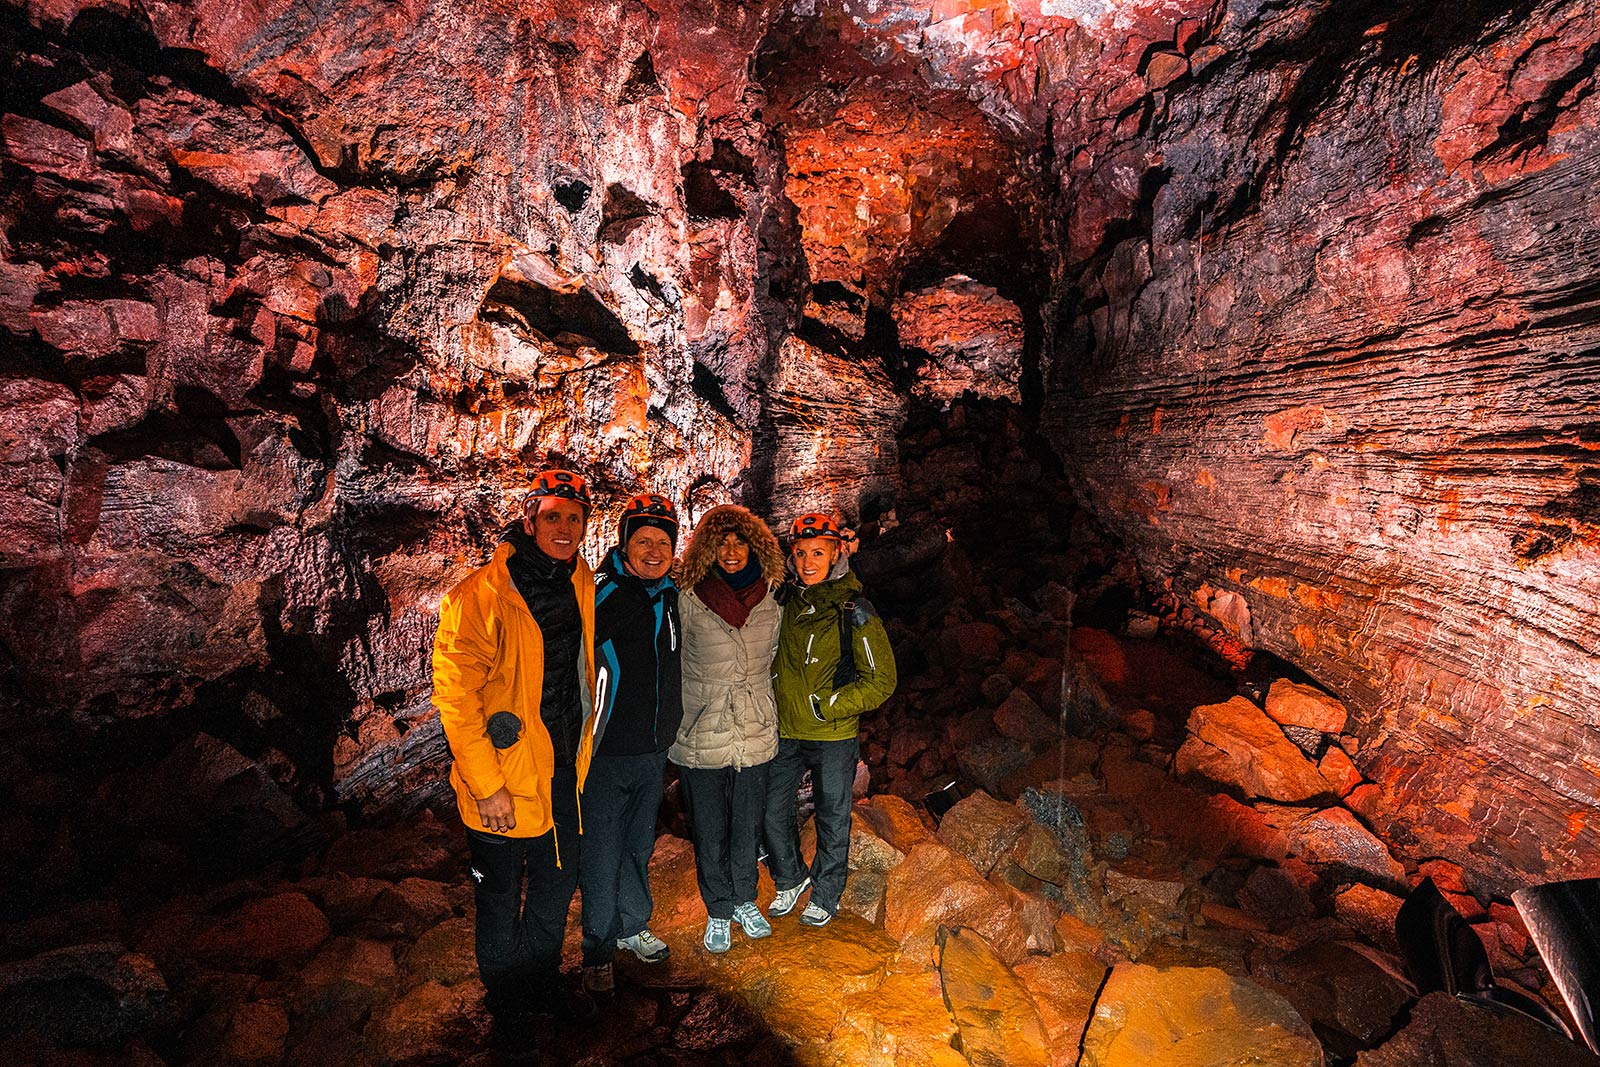 David Simpson and family exploring Raufarhólshellir Lava Tunnel in Iceland. The Nordic series, reflection post